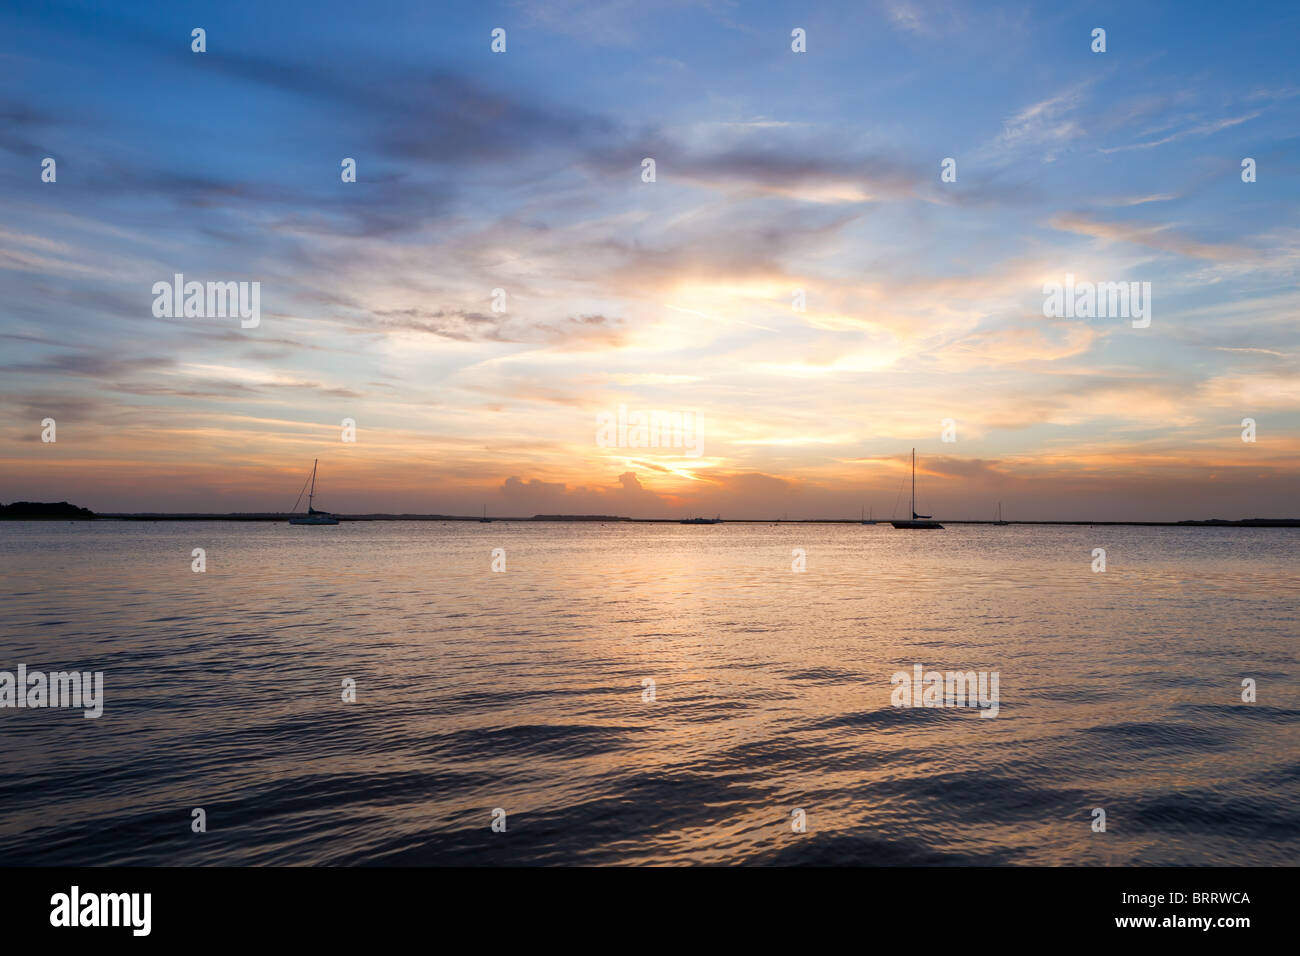 Sailing boat silhouette over sunset sky. Fernandina beach, Florida, USA Stock Photo